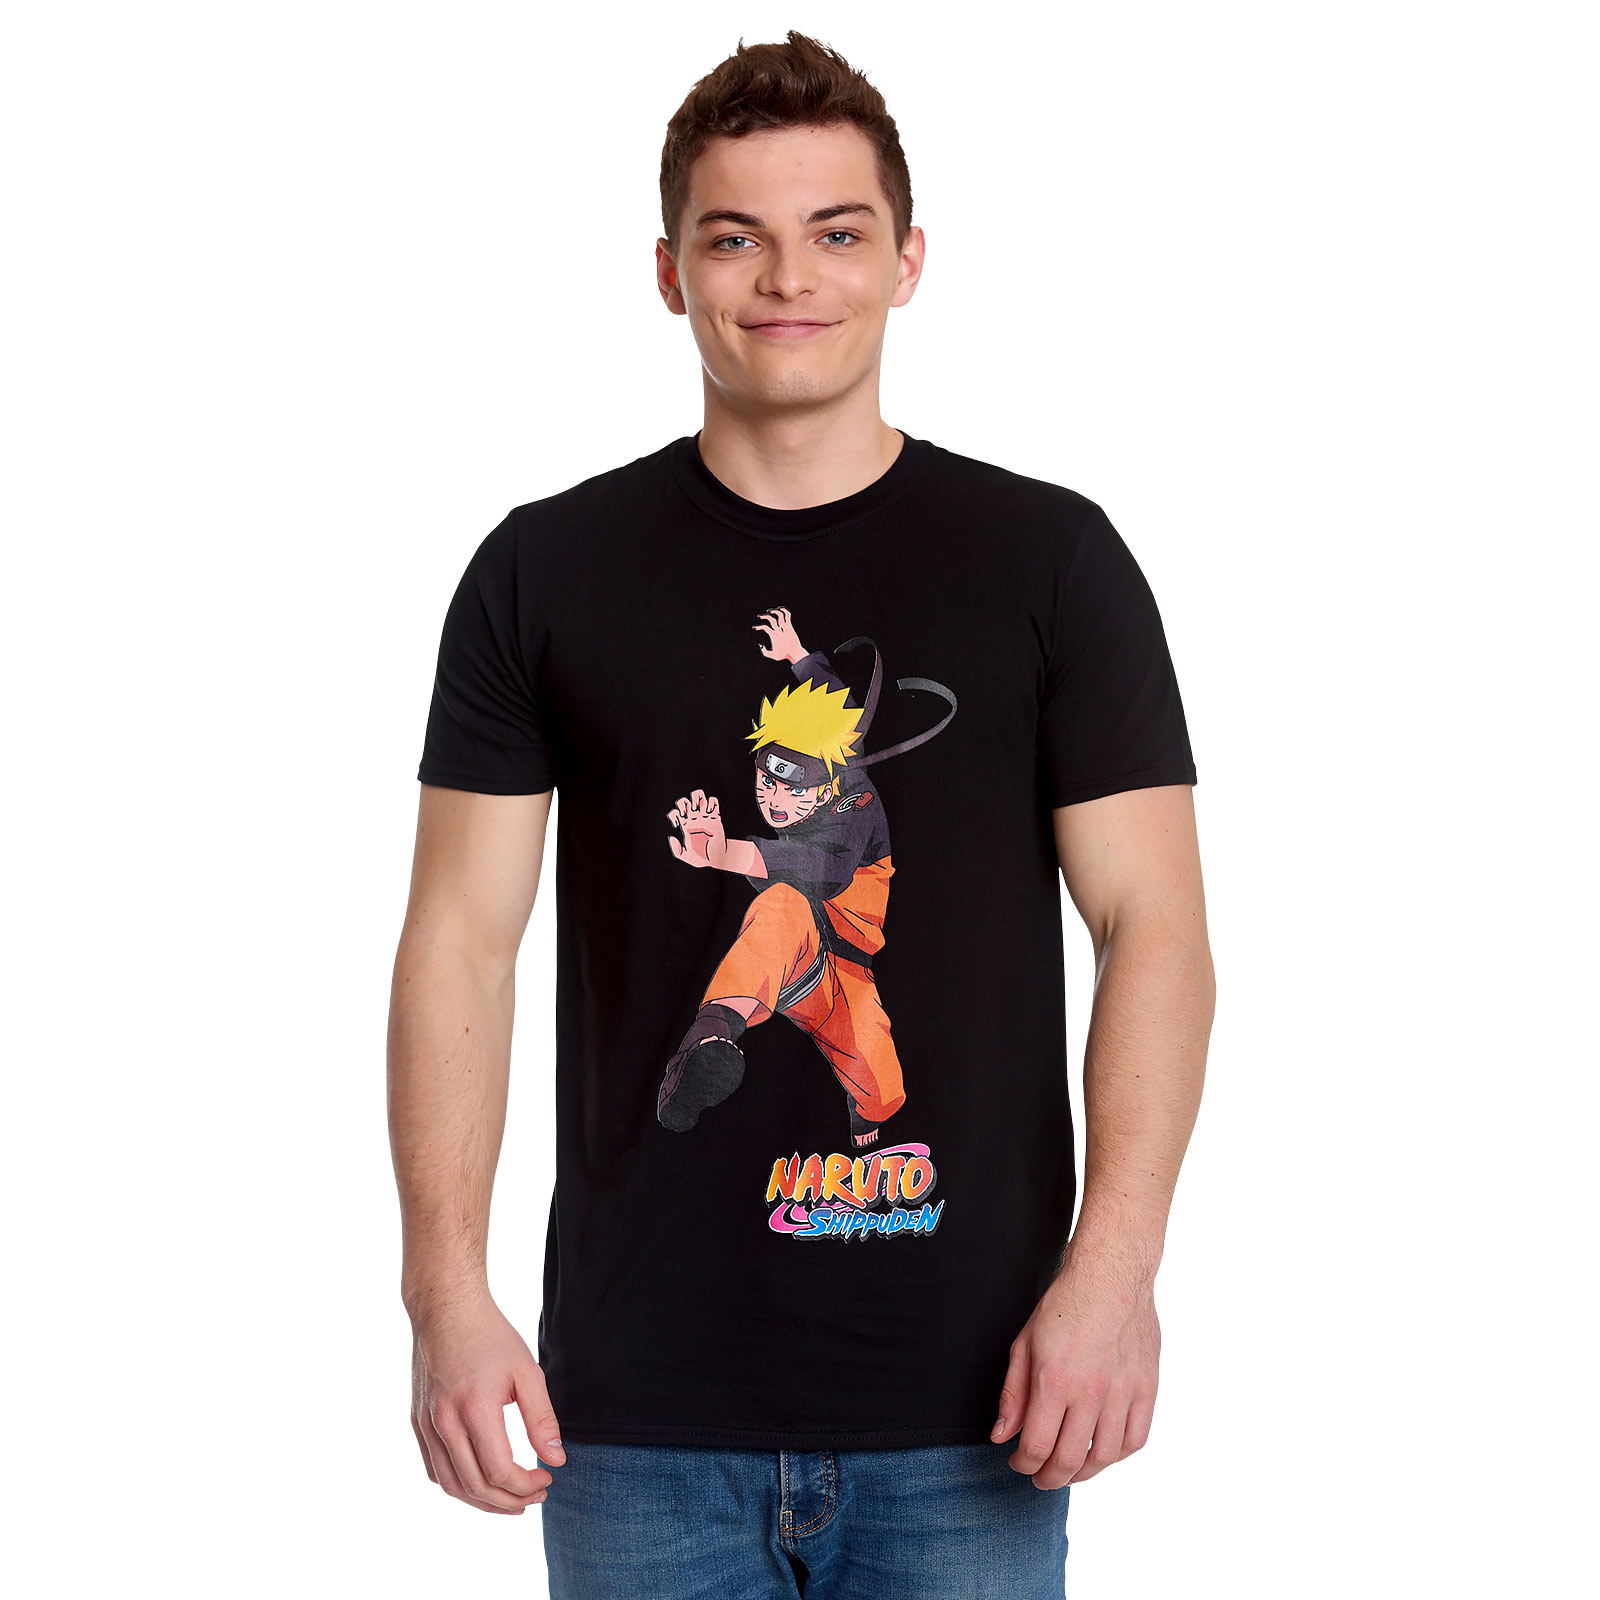 Naruto Character T-Shirt schwarz